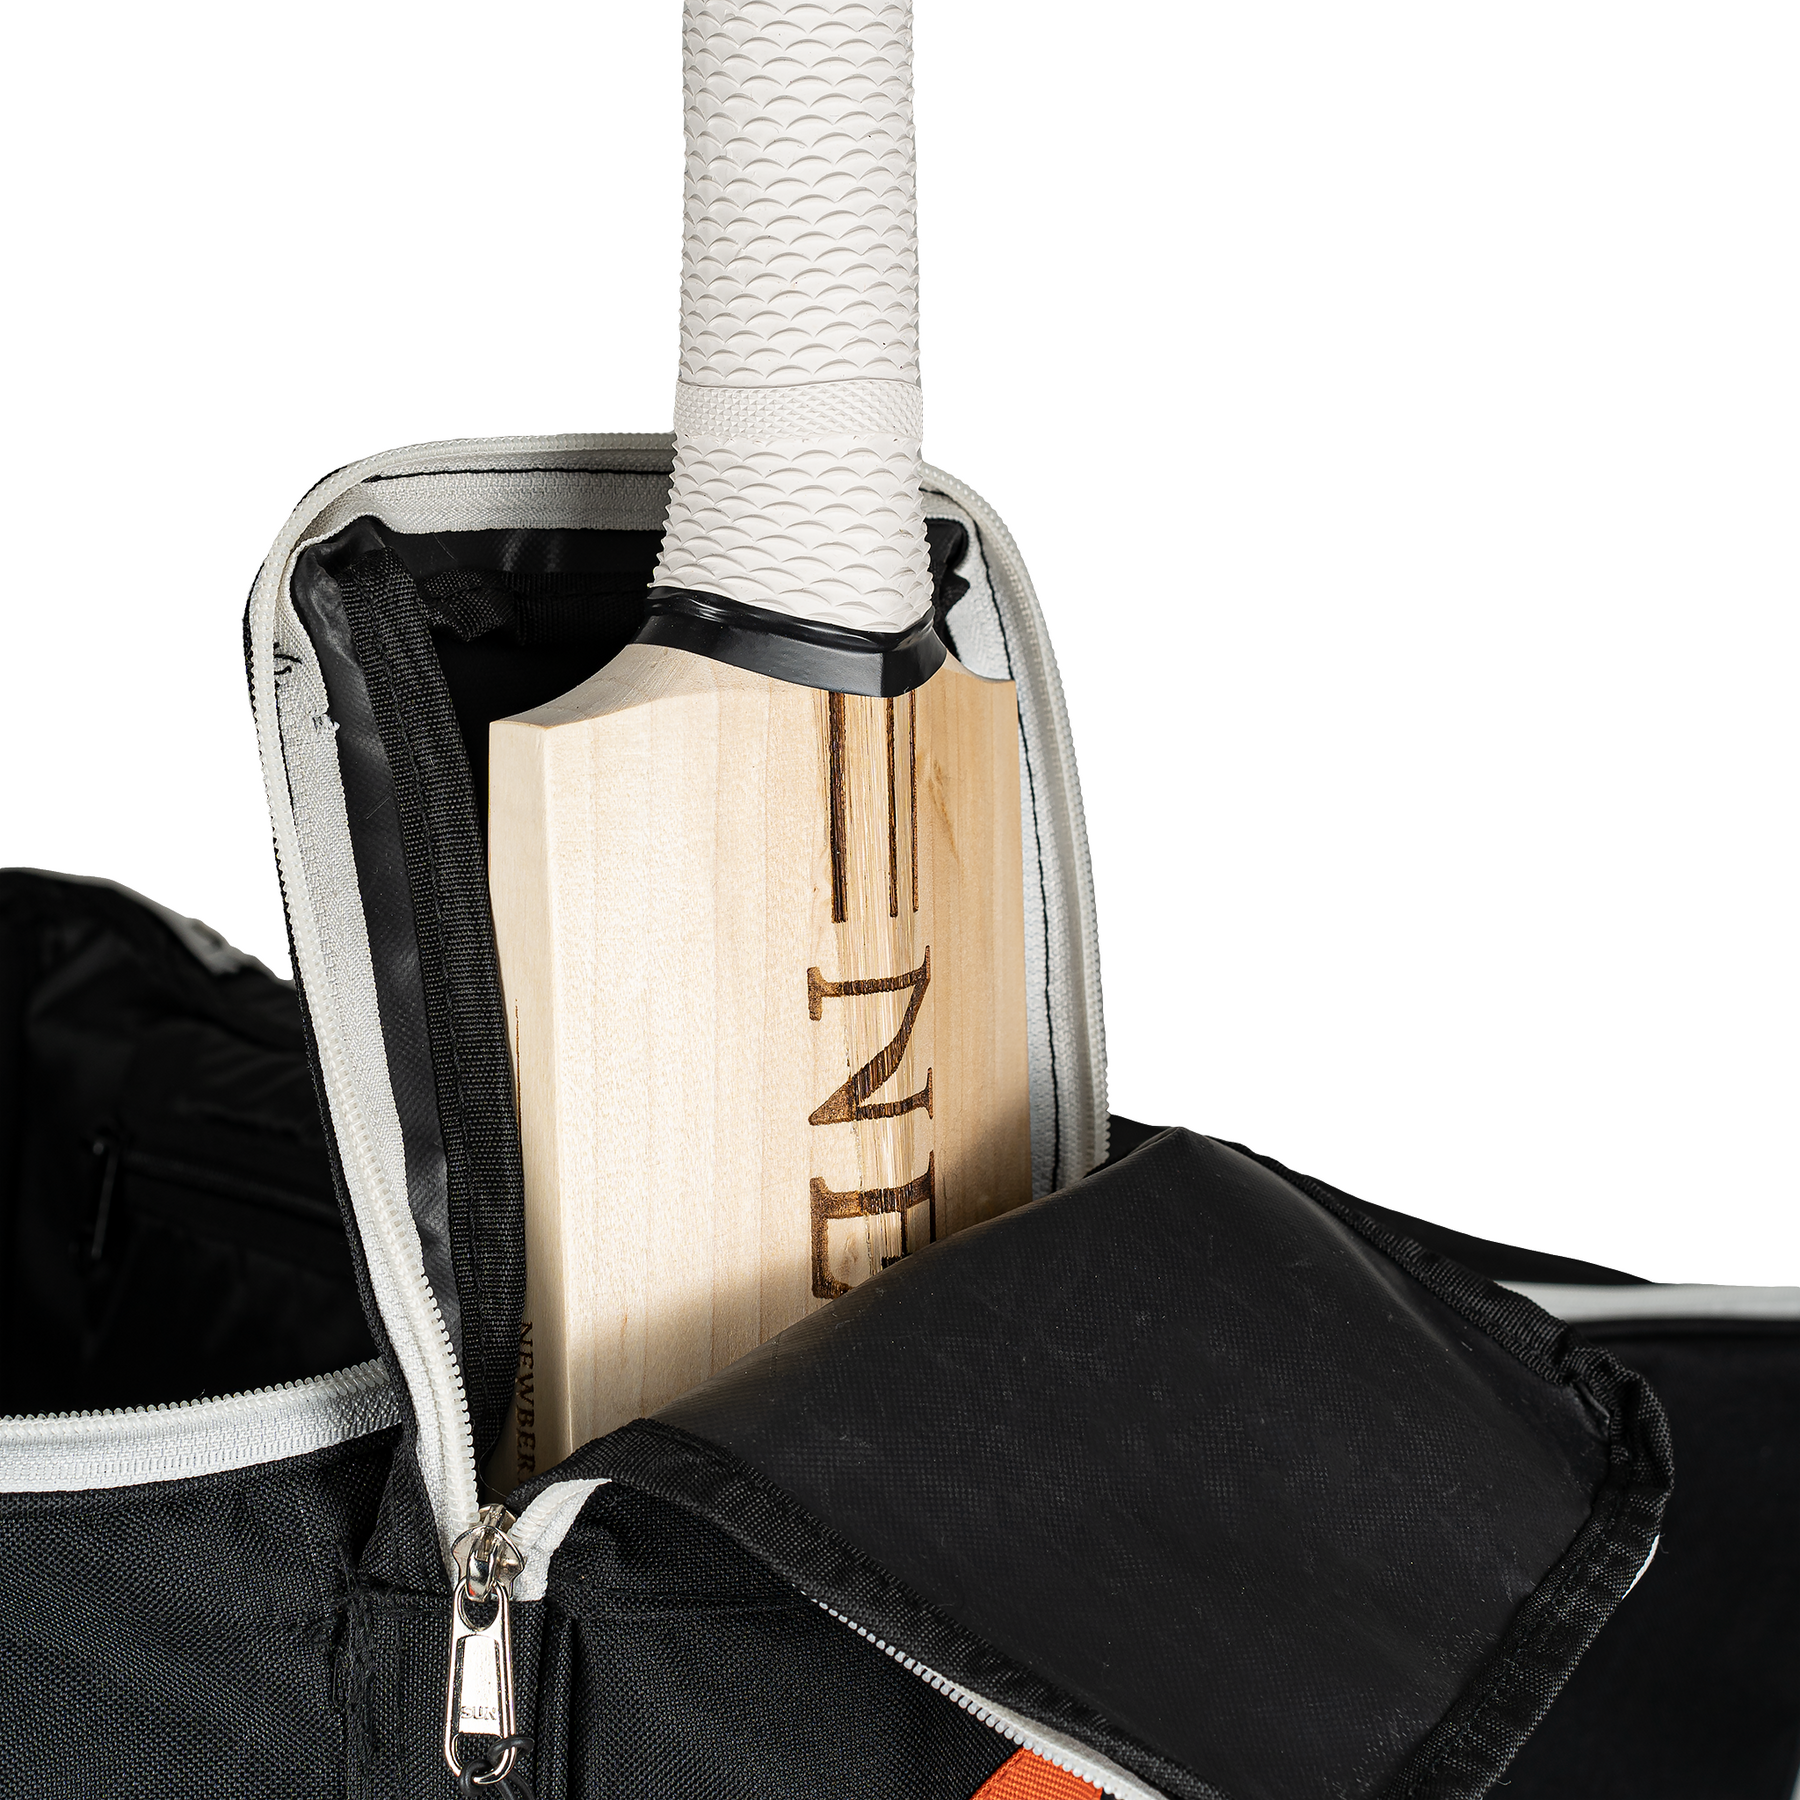 Newbery Master 100 Duffle Cricket Kit Bag